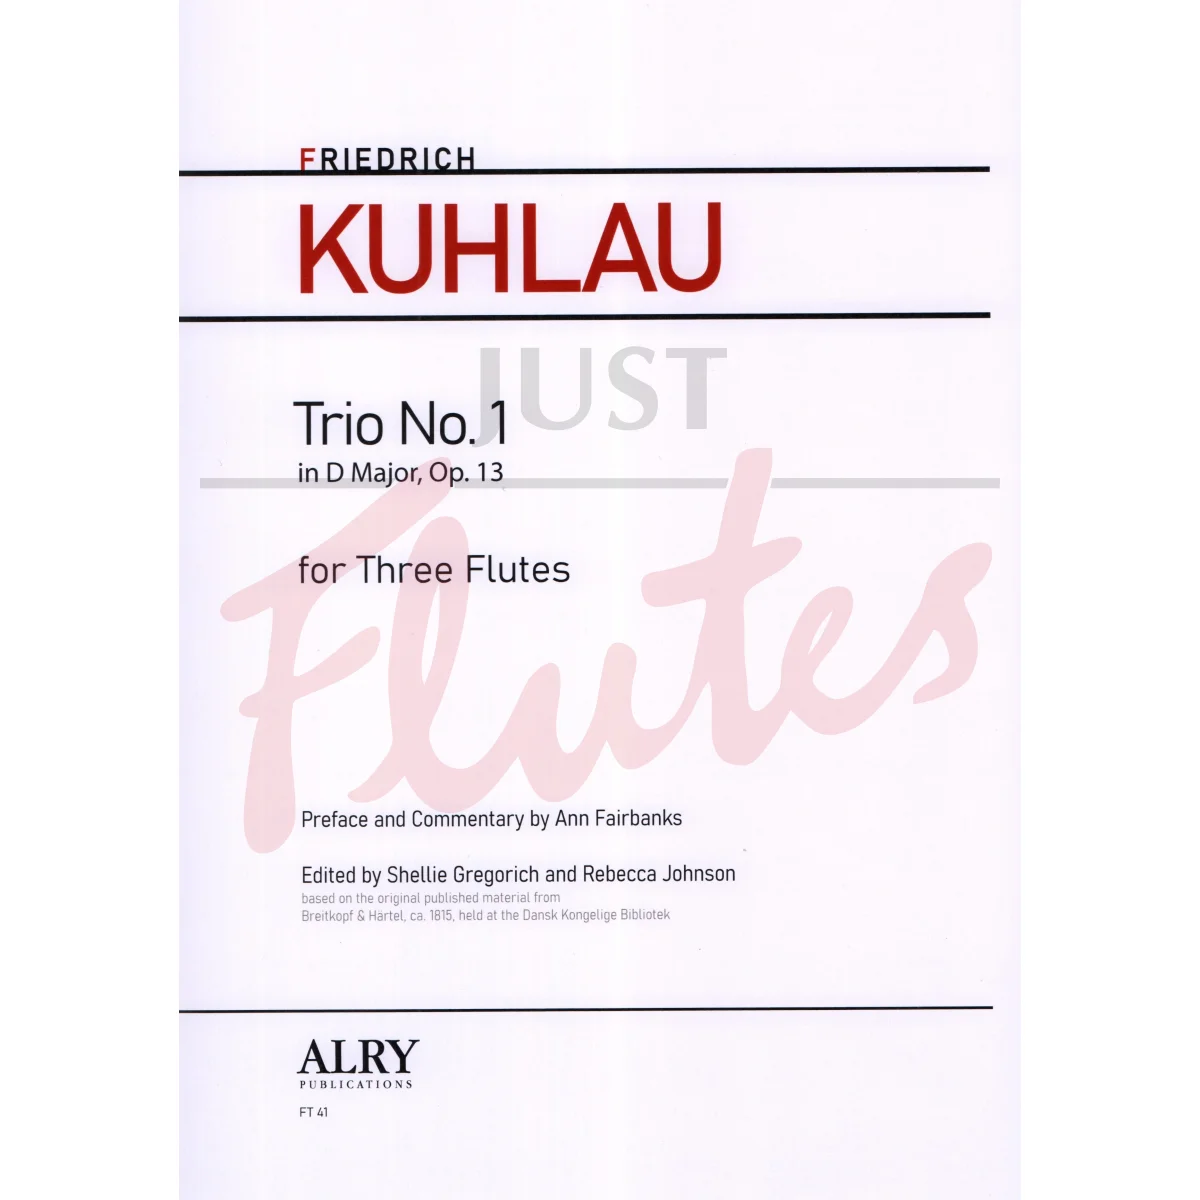 Trio No. 1 in D major for Three Flutes